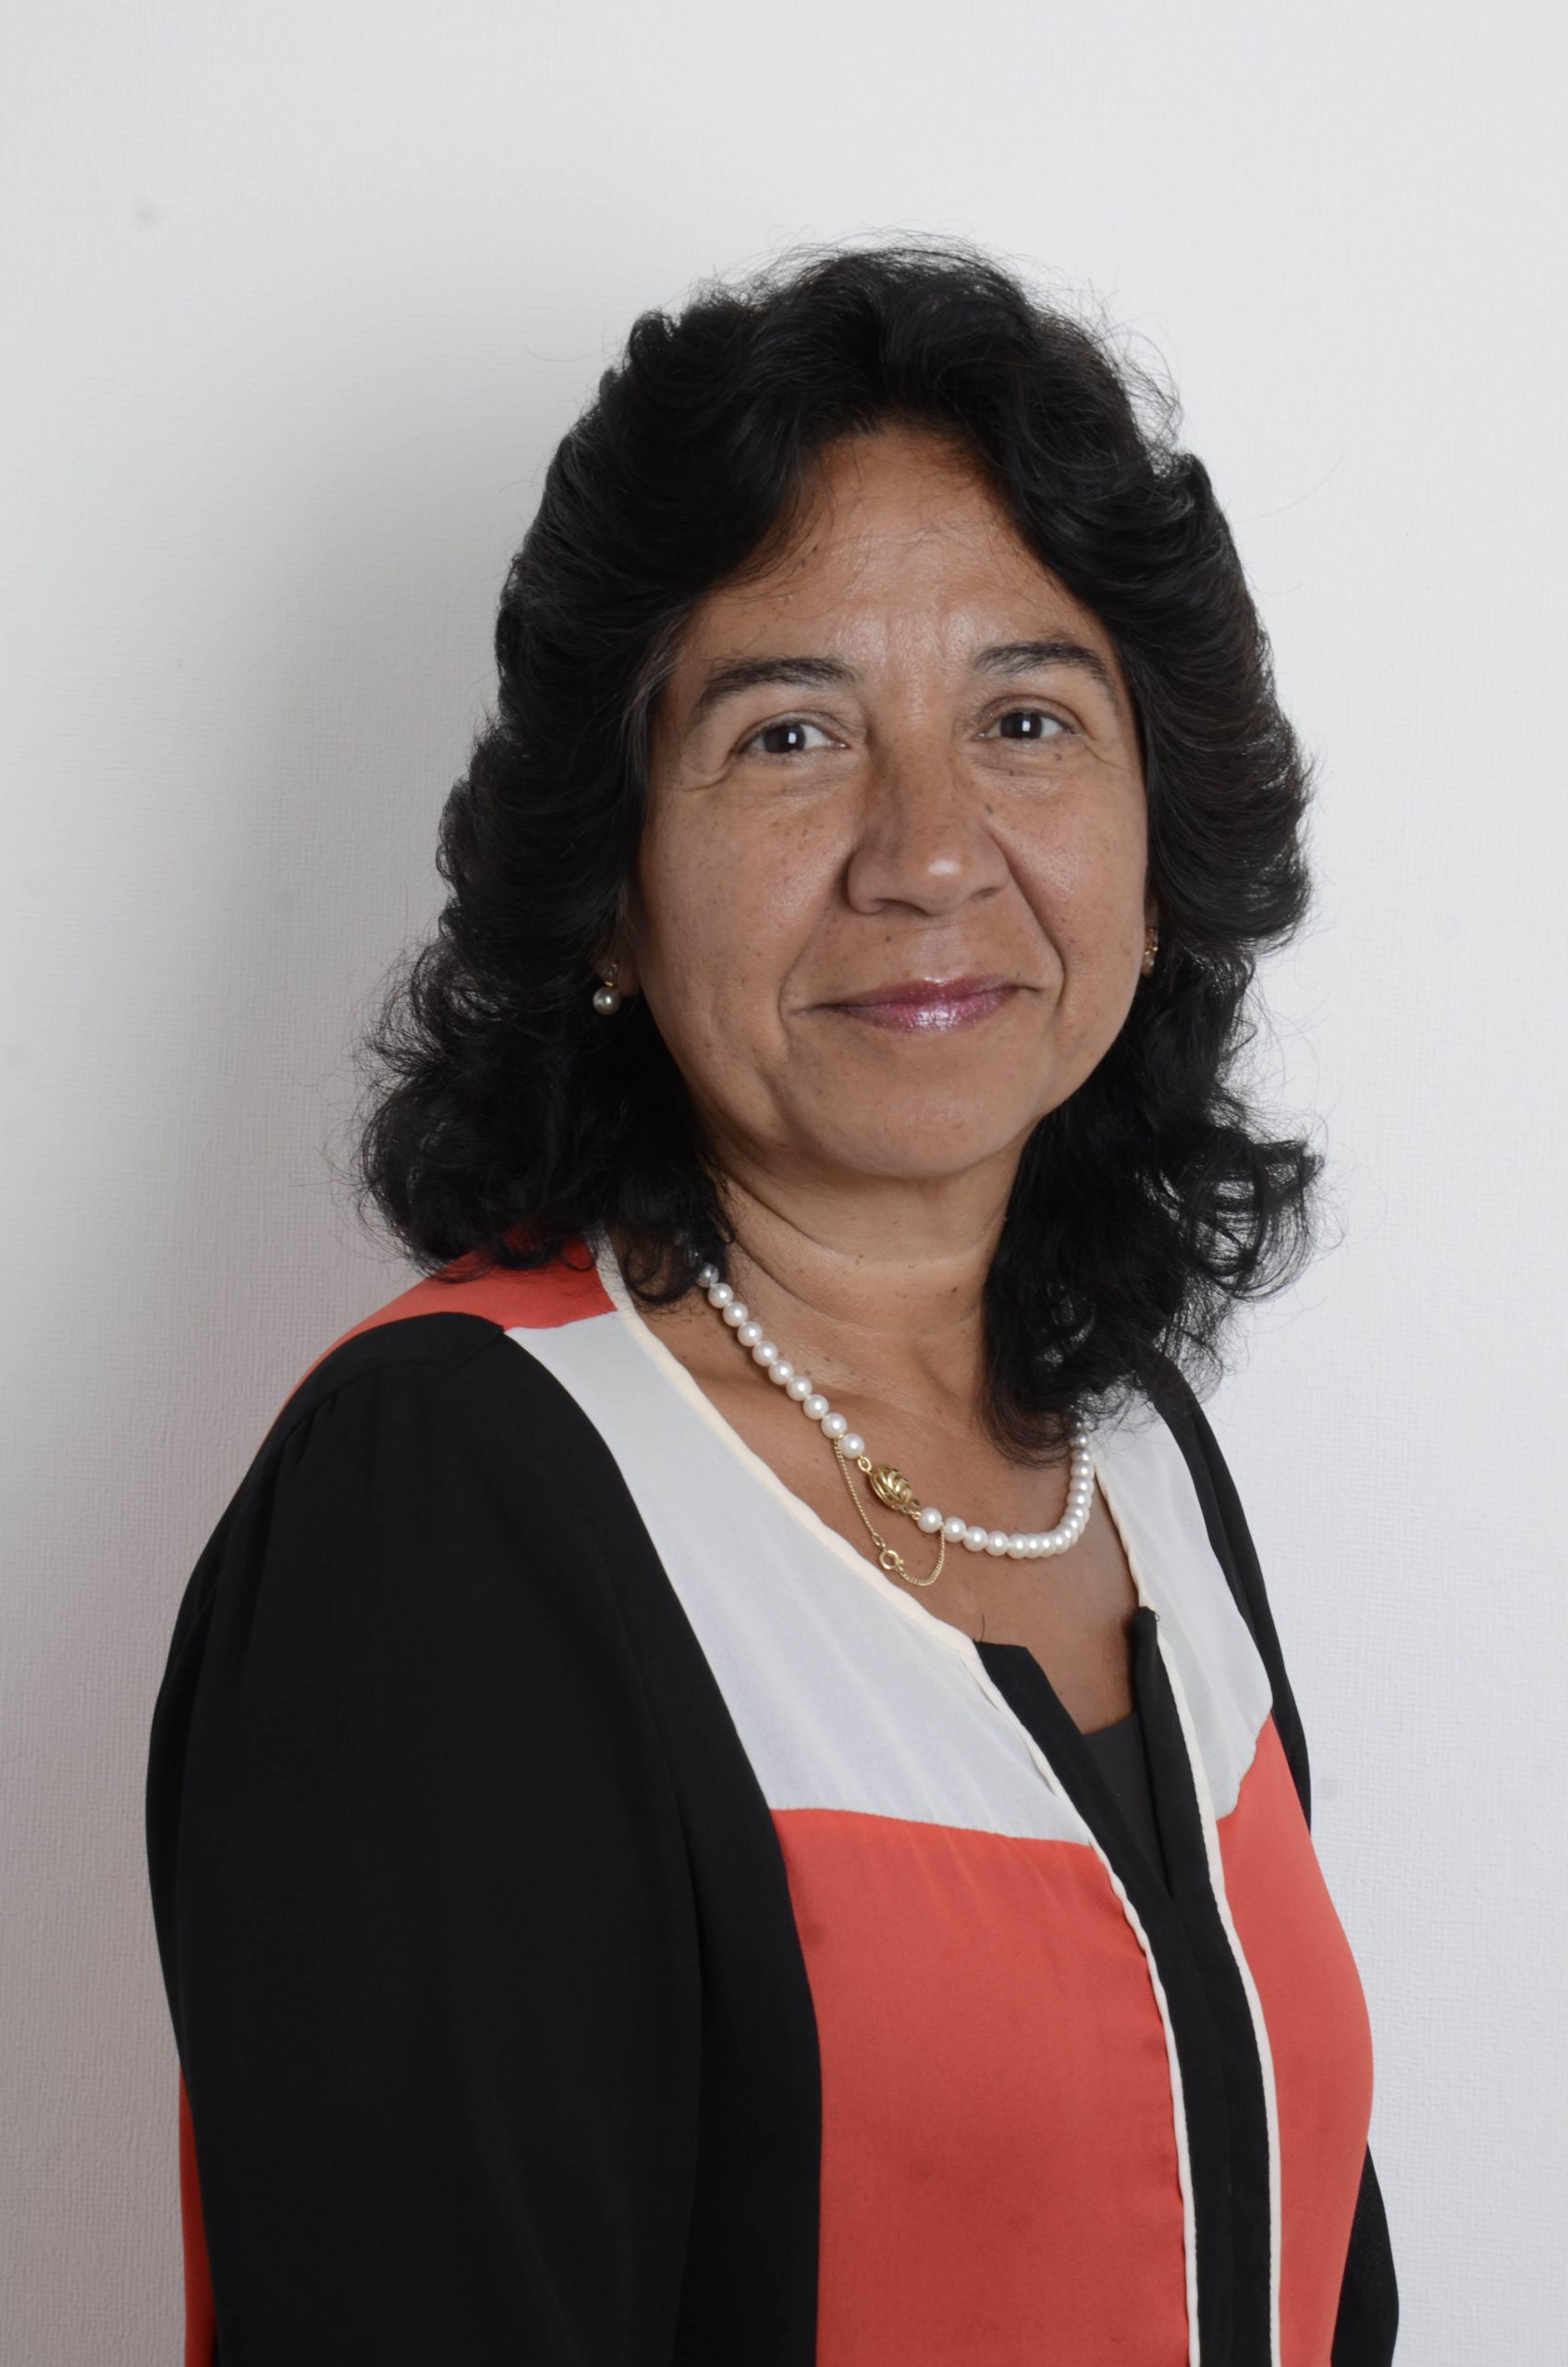 Ana María Ulloa Quijada